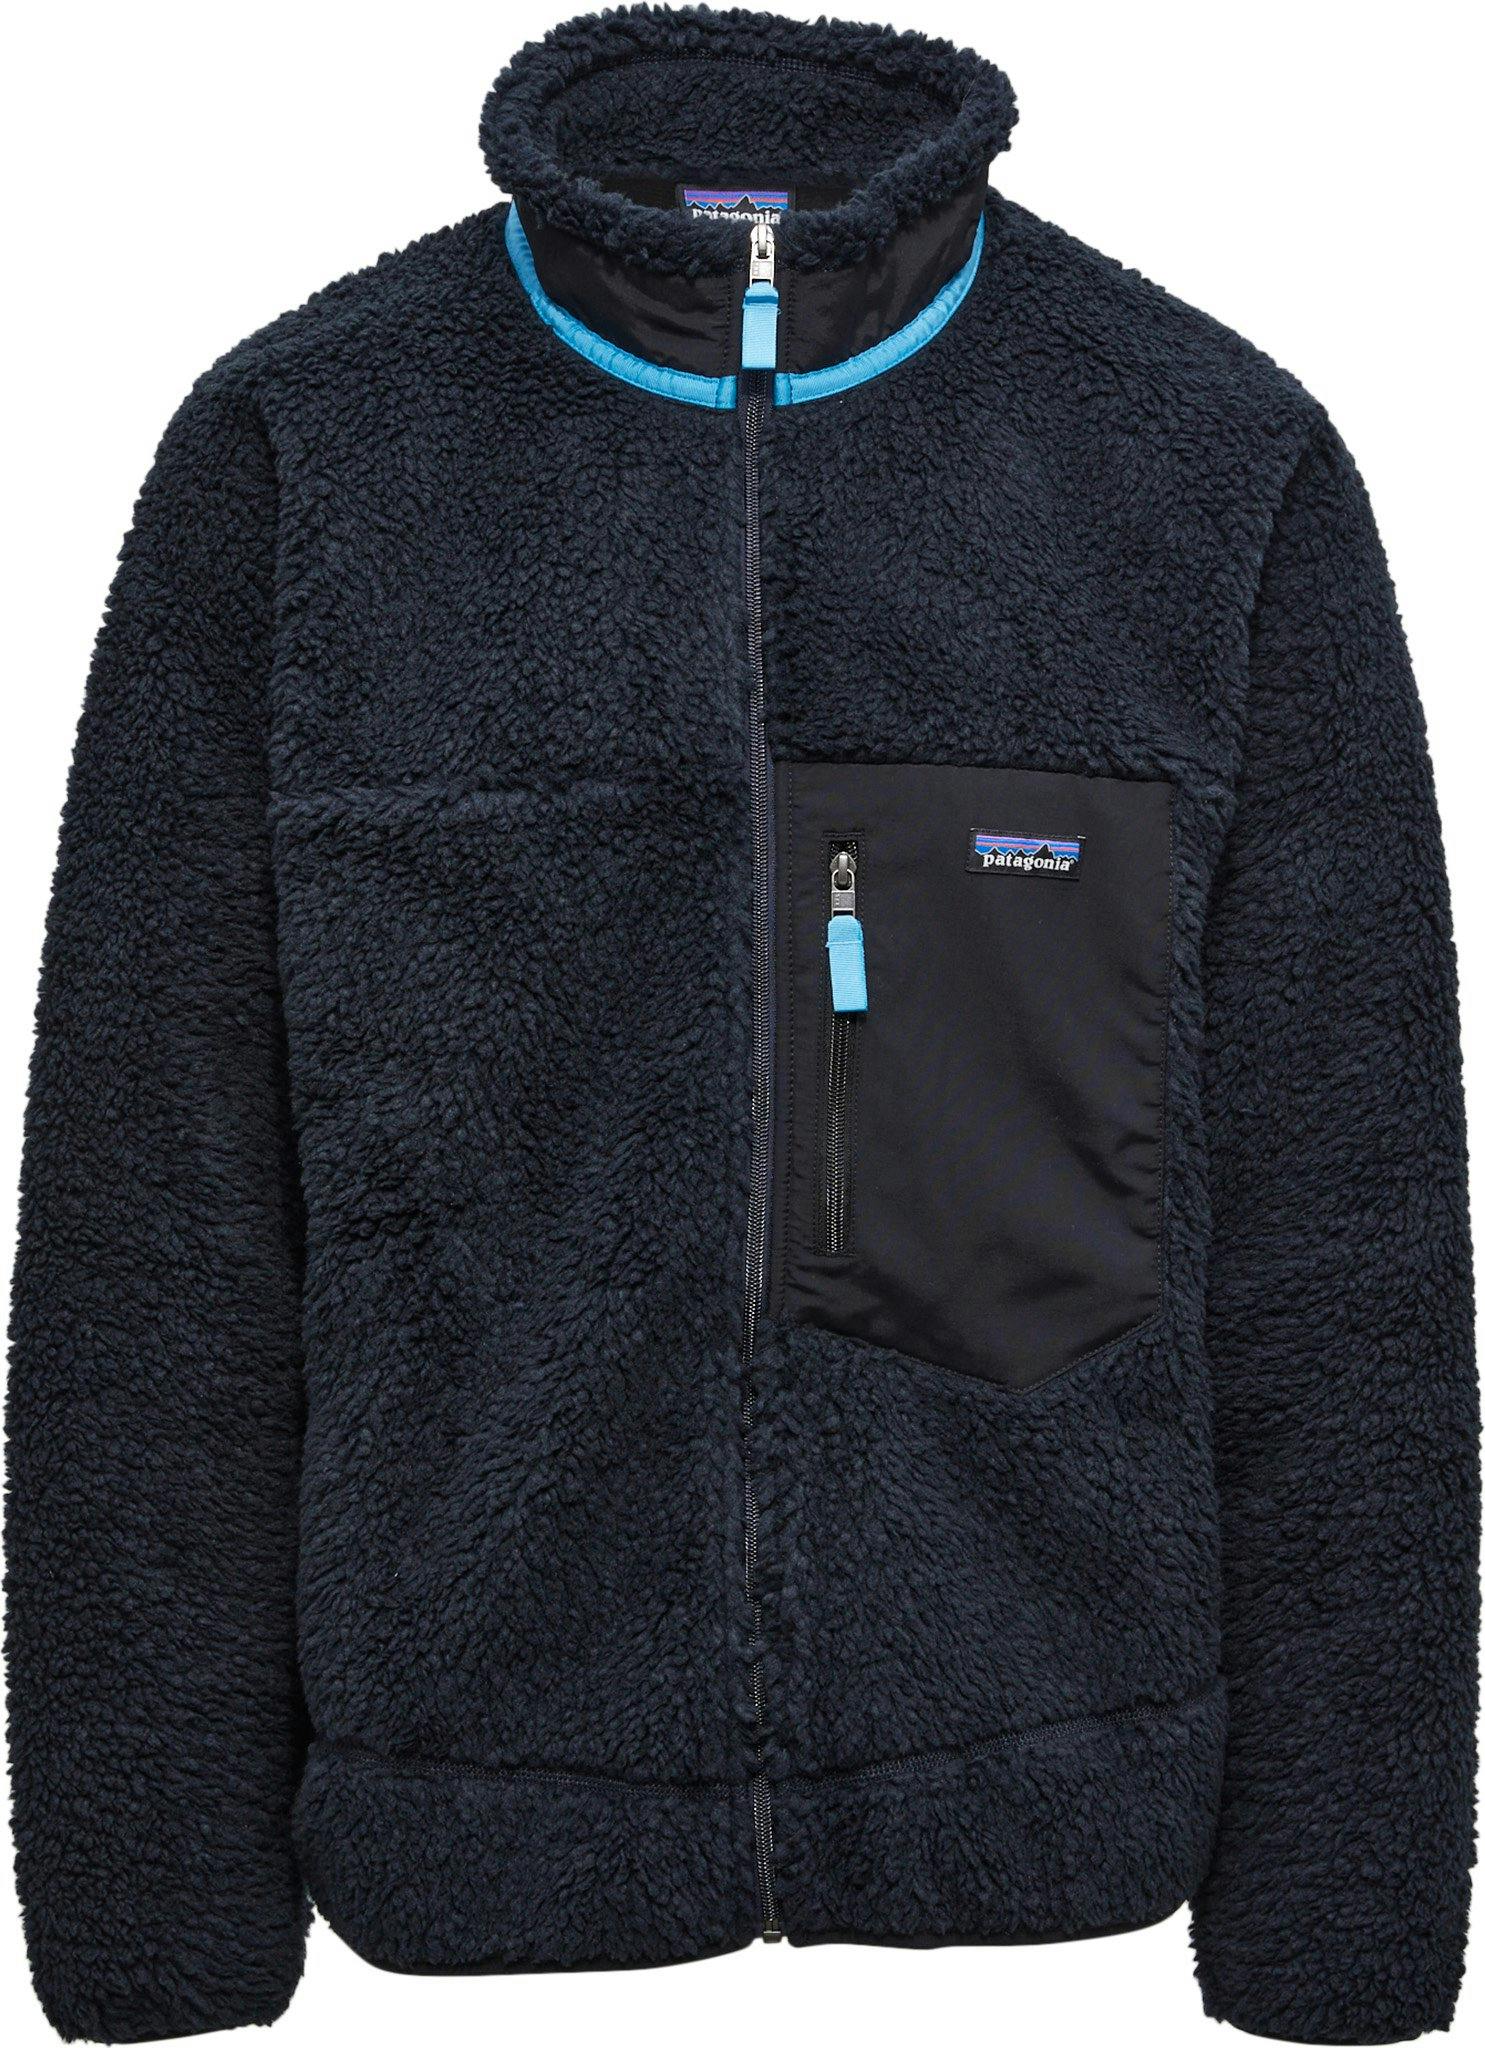 Product image for Classic Retro-X® Fleece Jacket - Men's